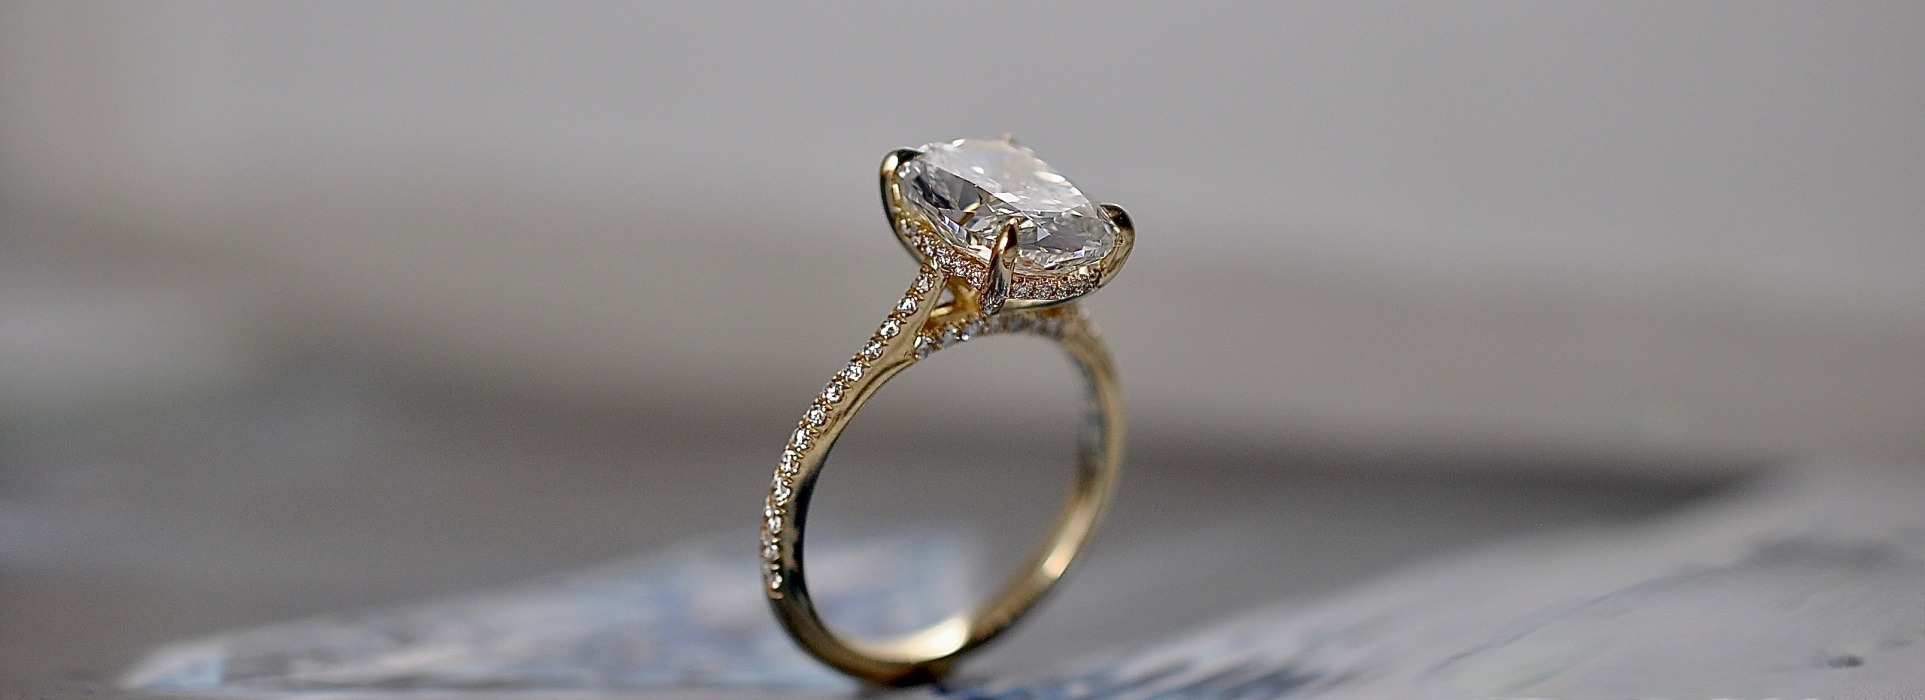 Gorgeous diamond ring showcasing timeless elegance